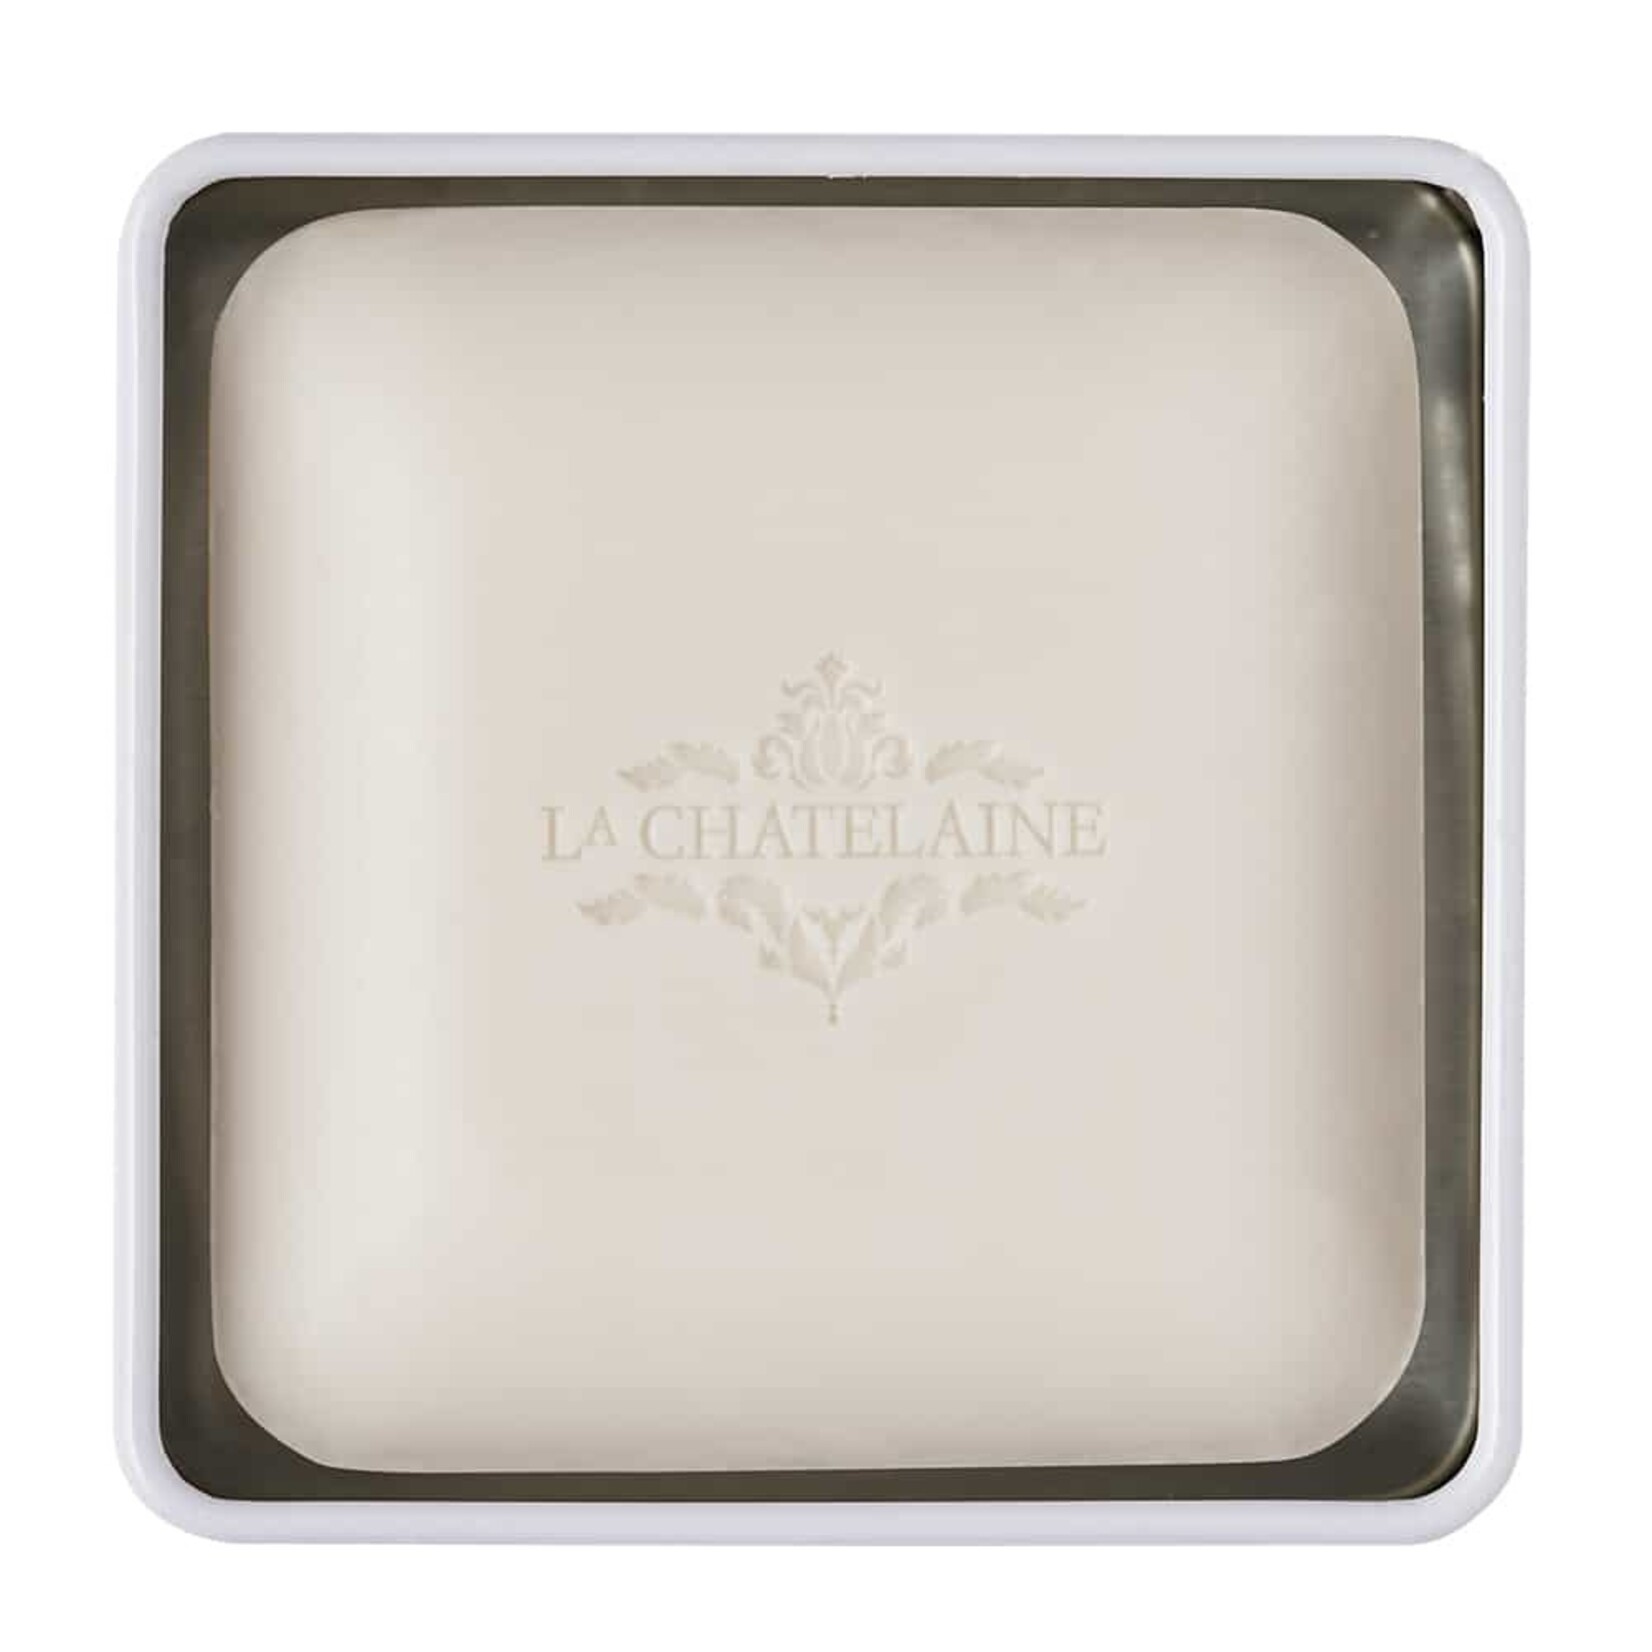 La Chatelaine Travel Soap Tin